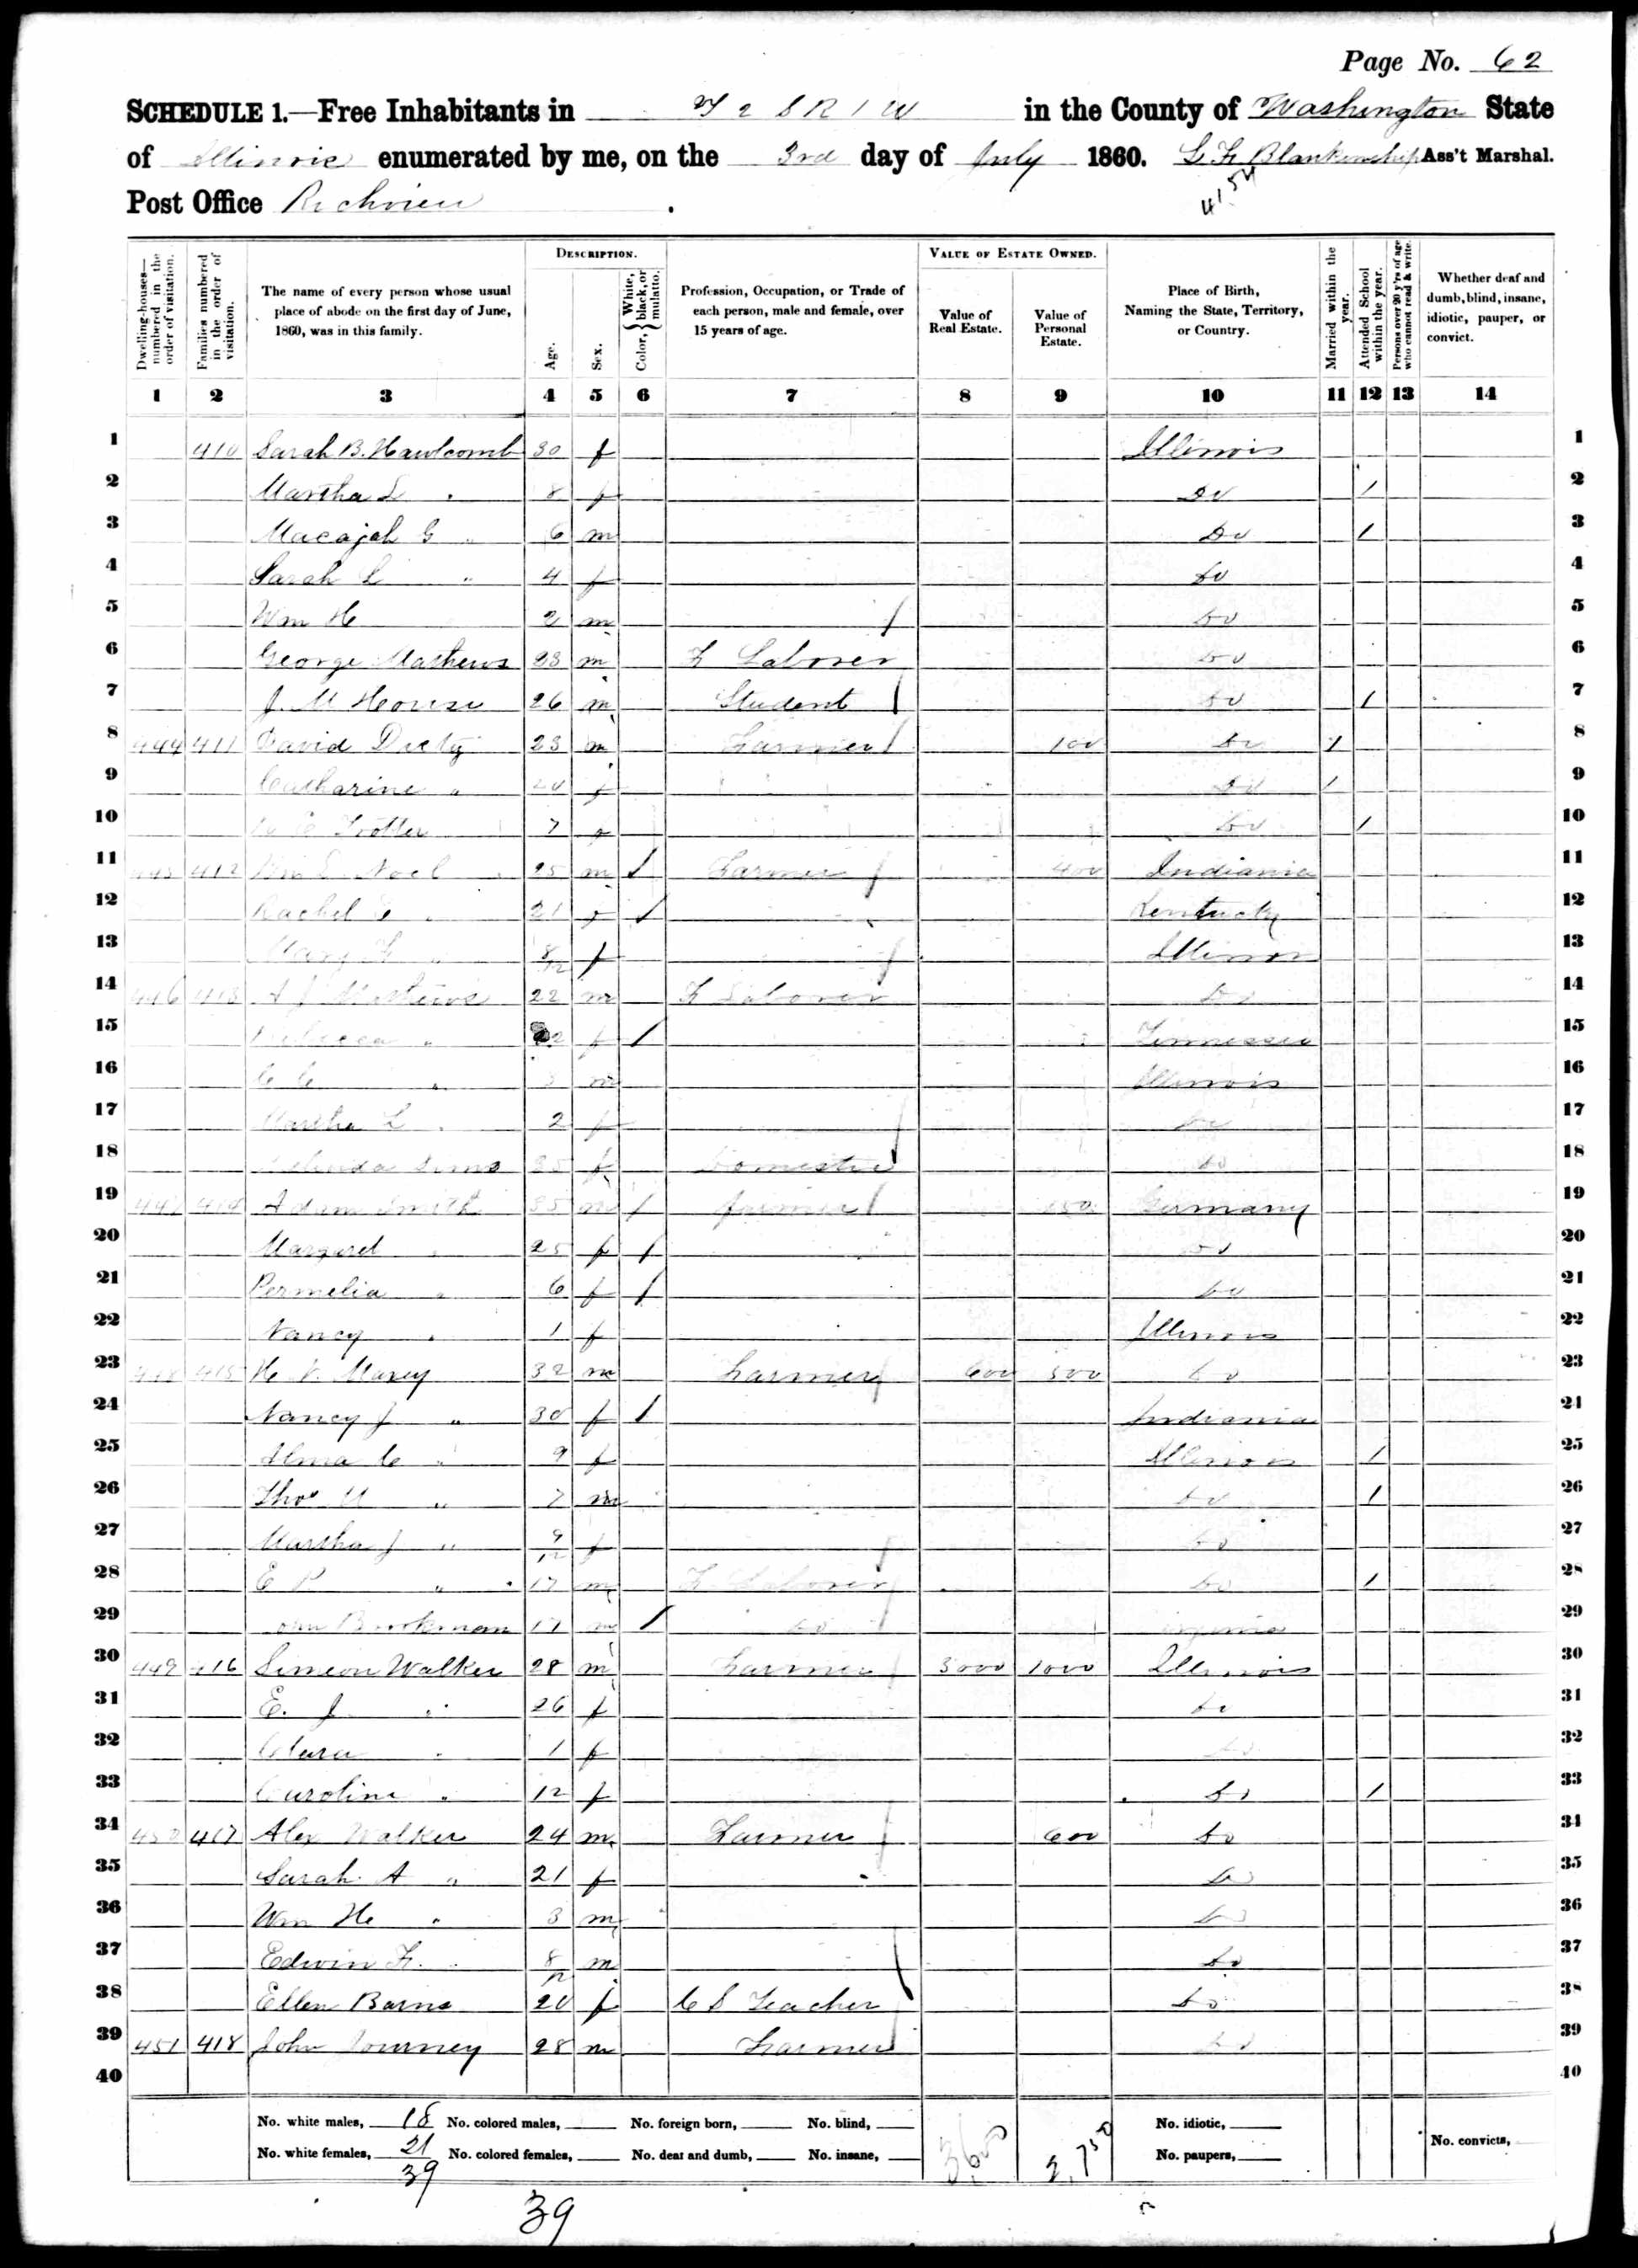 John M. Journey, 1860 Washington County, Illinois, census